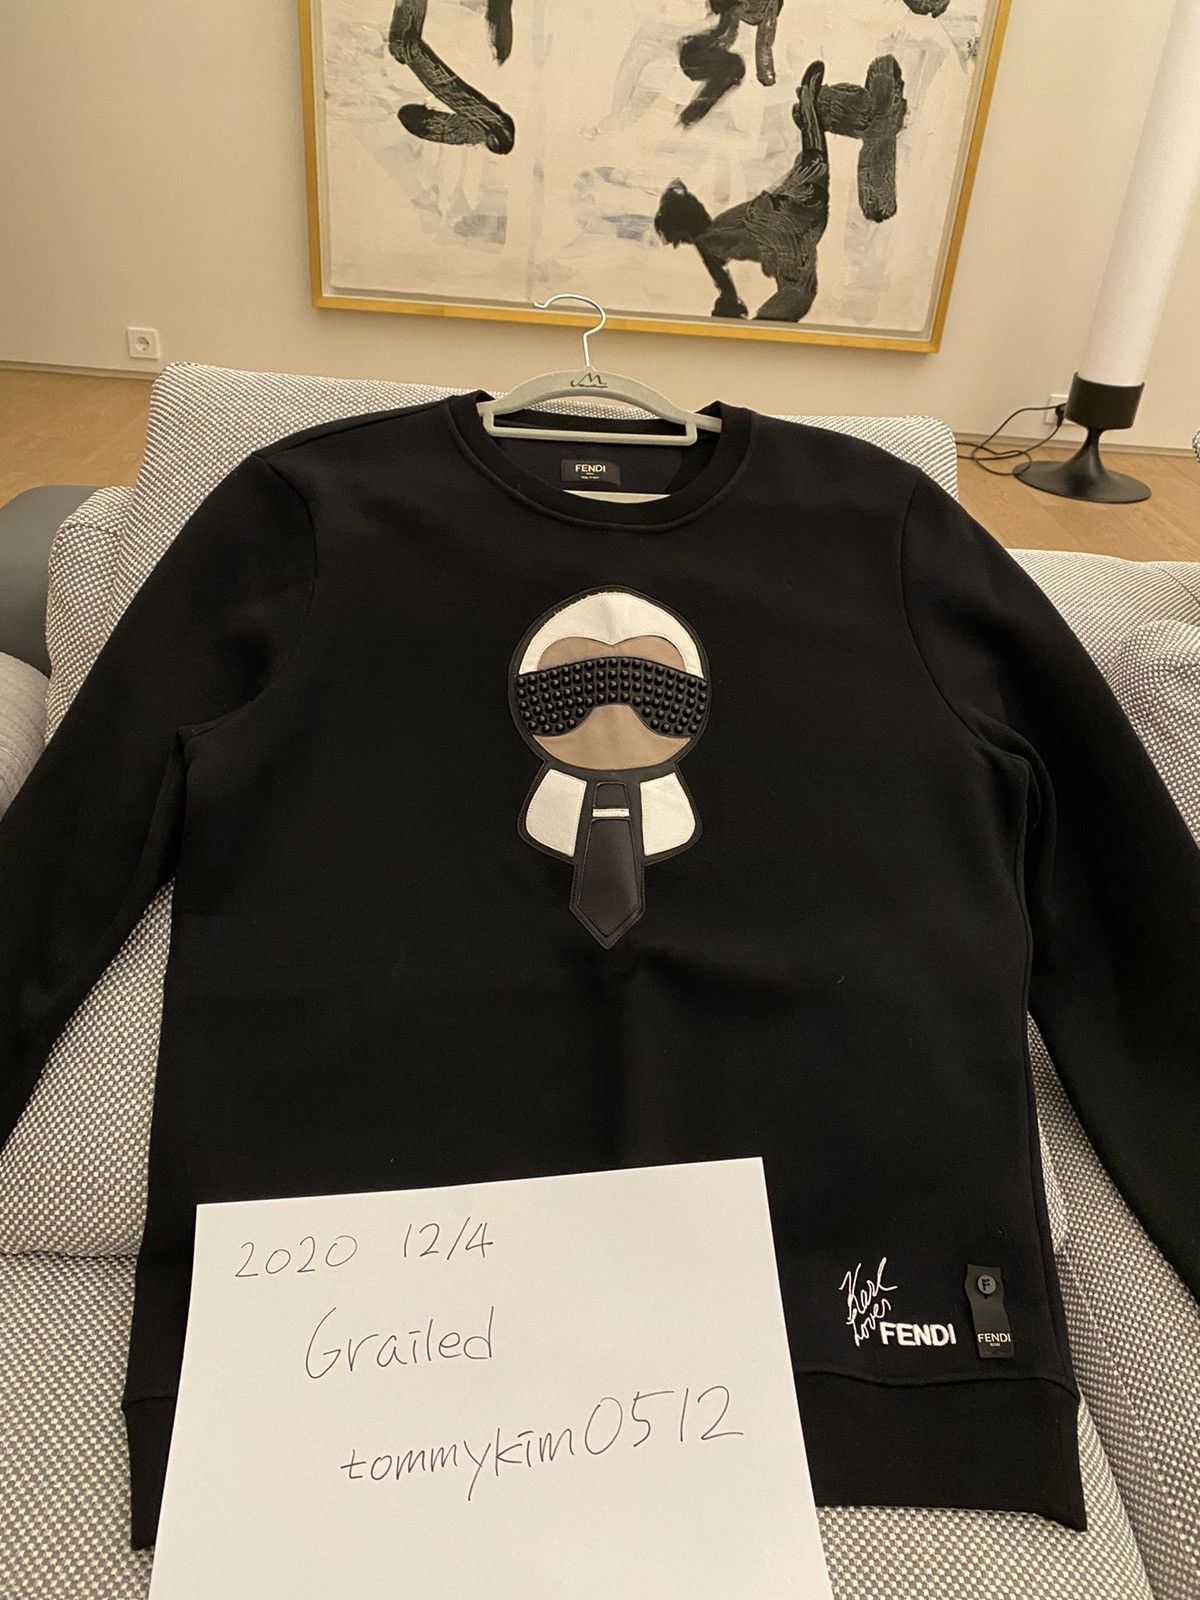 Sophie at ringe kradse Fendi Fendi x Karl Lagerfeld “Karlito” sweatshirt | Grailed